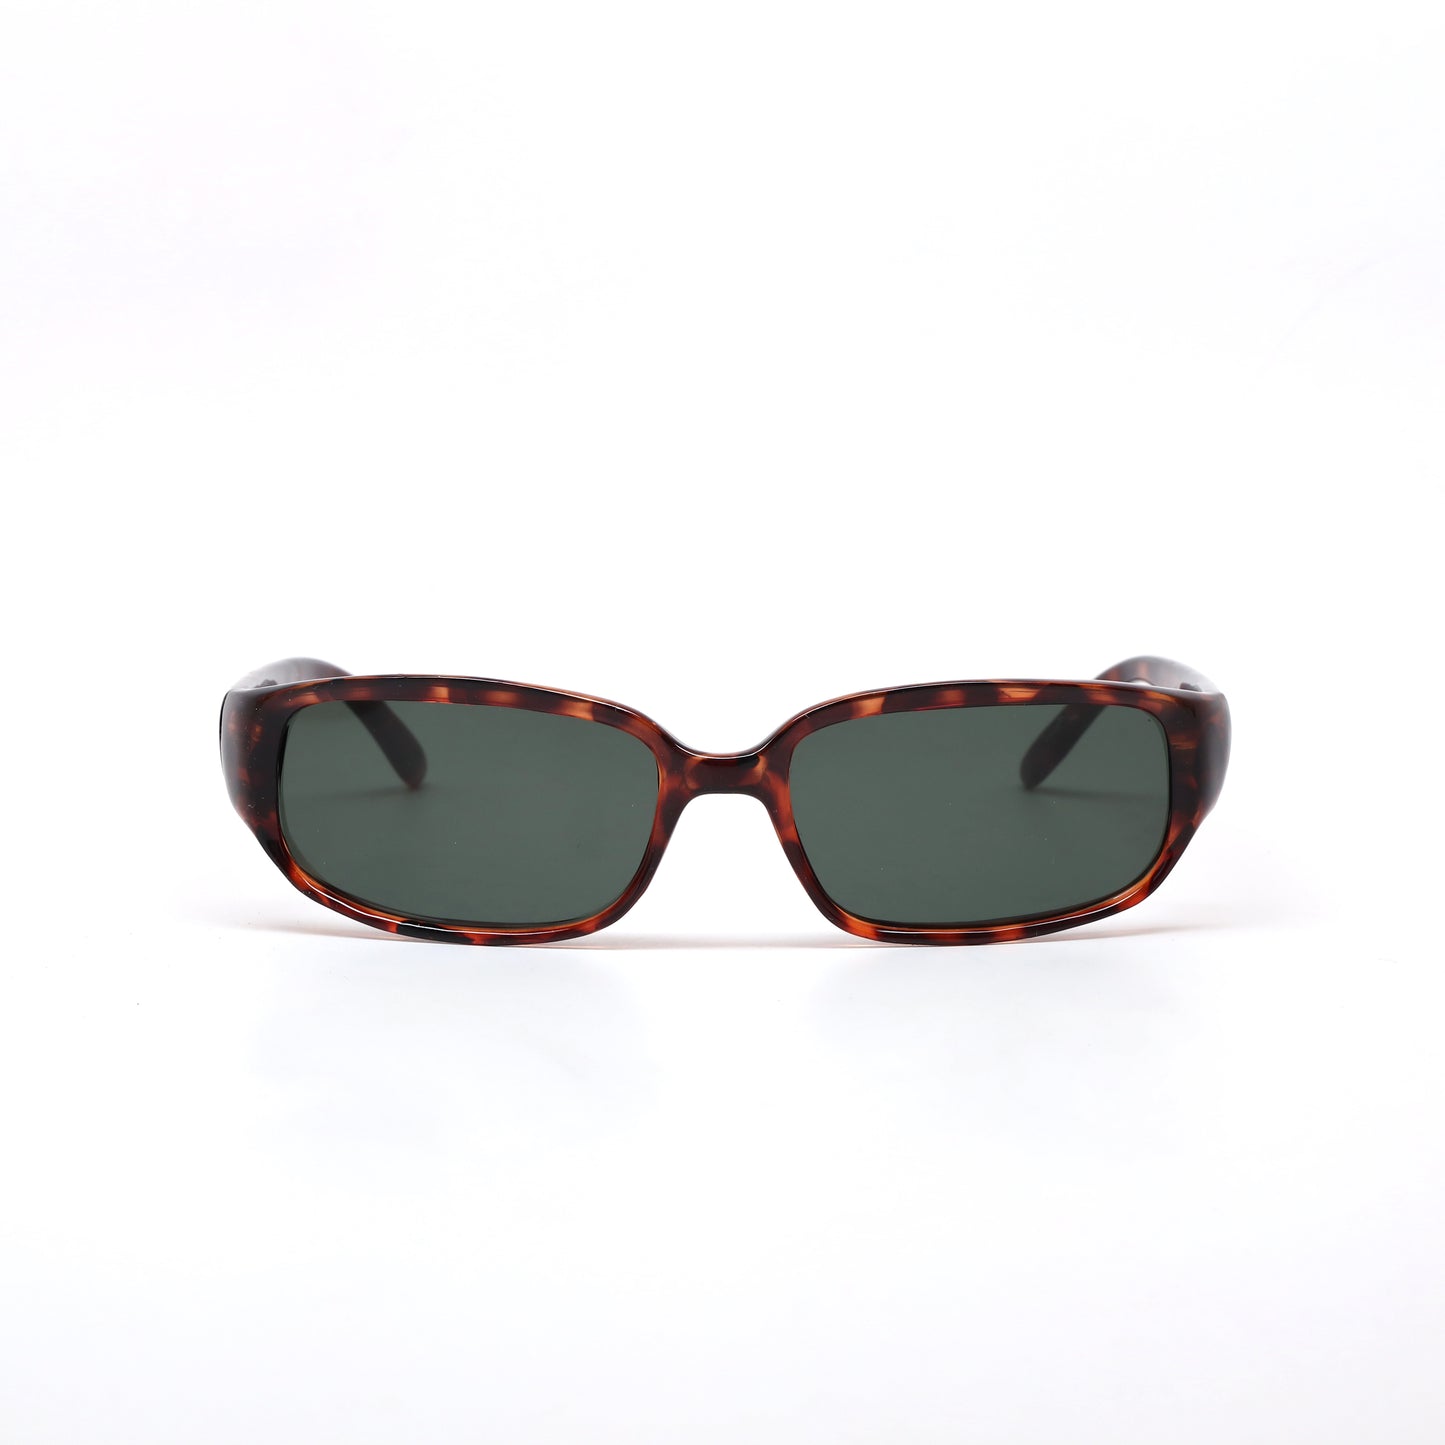 Vintage Standard Size Rectangle Frame Sunglasses - Tortoise